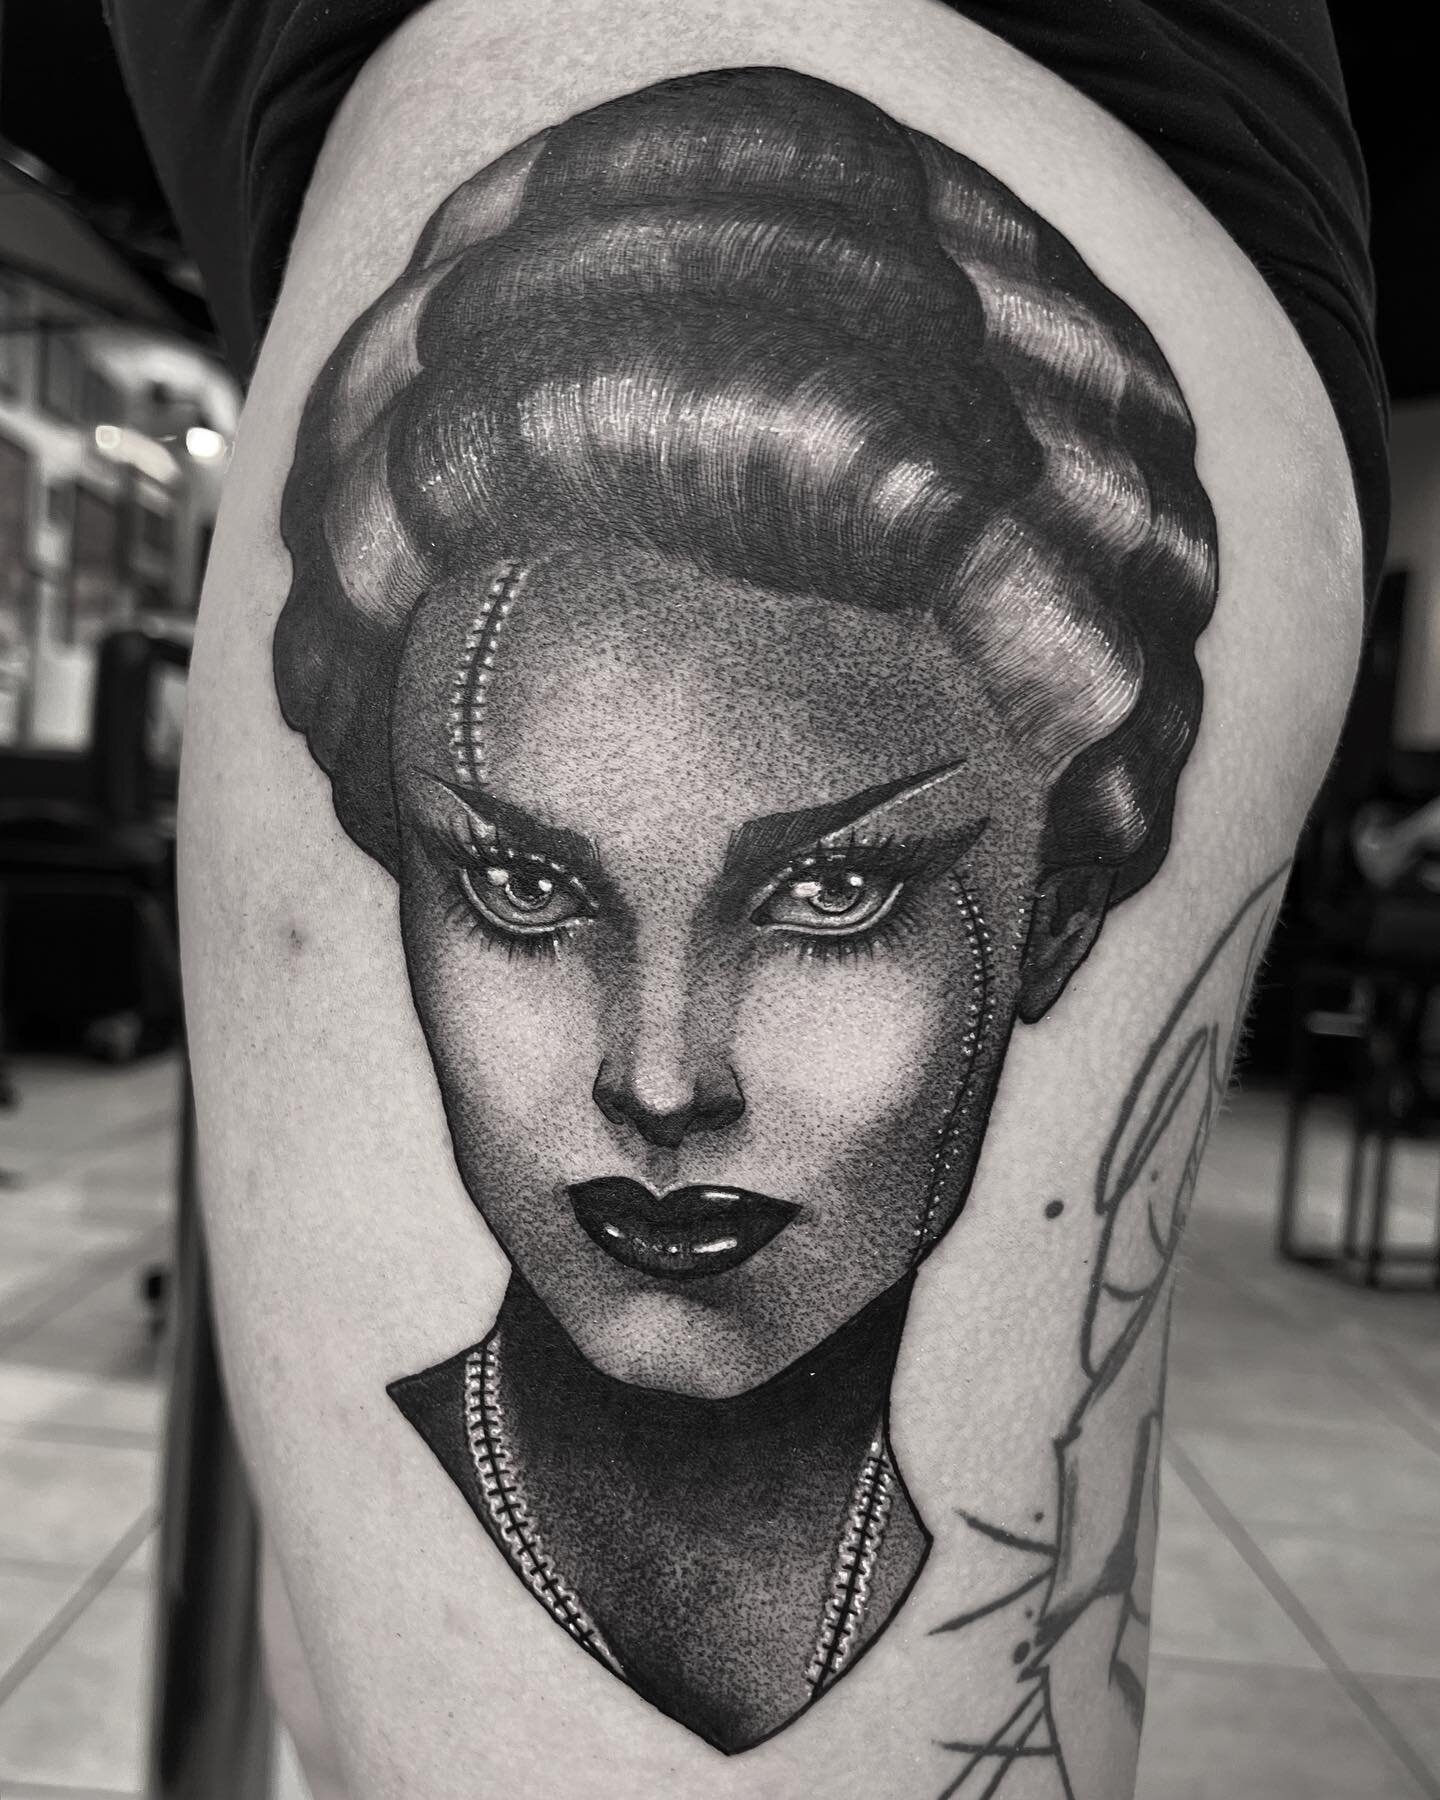 Bride of Frankenstein 🖤 Thanks Angela! ☠️ 
✖️ Done at @sharktooth_tattoo ✖️
.
.
.
.
@industryinks
@hivecaps 
@empireinks 
@goodguysupply 
.
.
.
.
.
.
.
.
.
.
.
.
.
.
#tattoo #tattoos #tattooartist #tattooed #tattooist #blackworkers #blackworker #lin